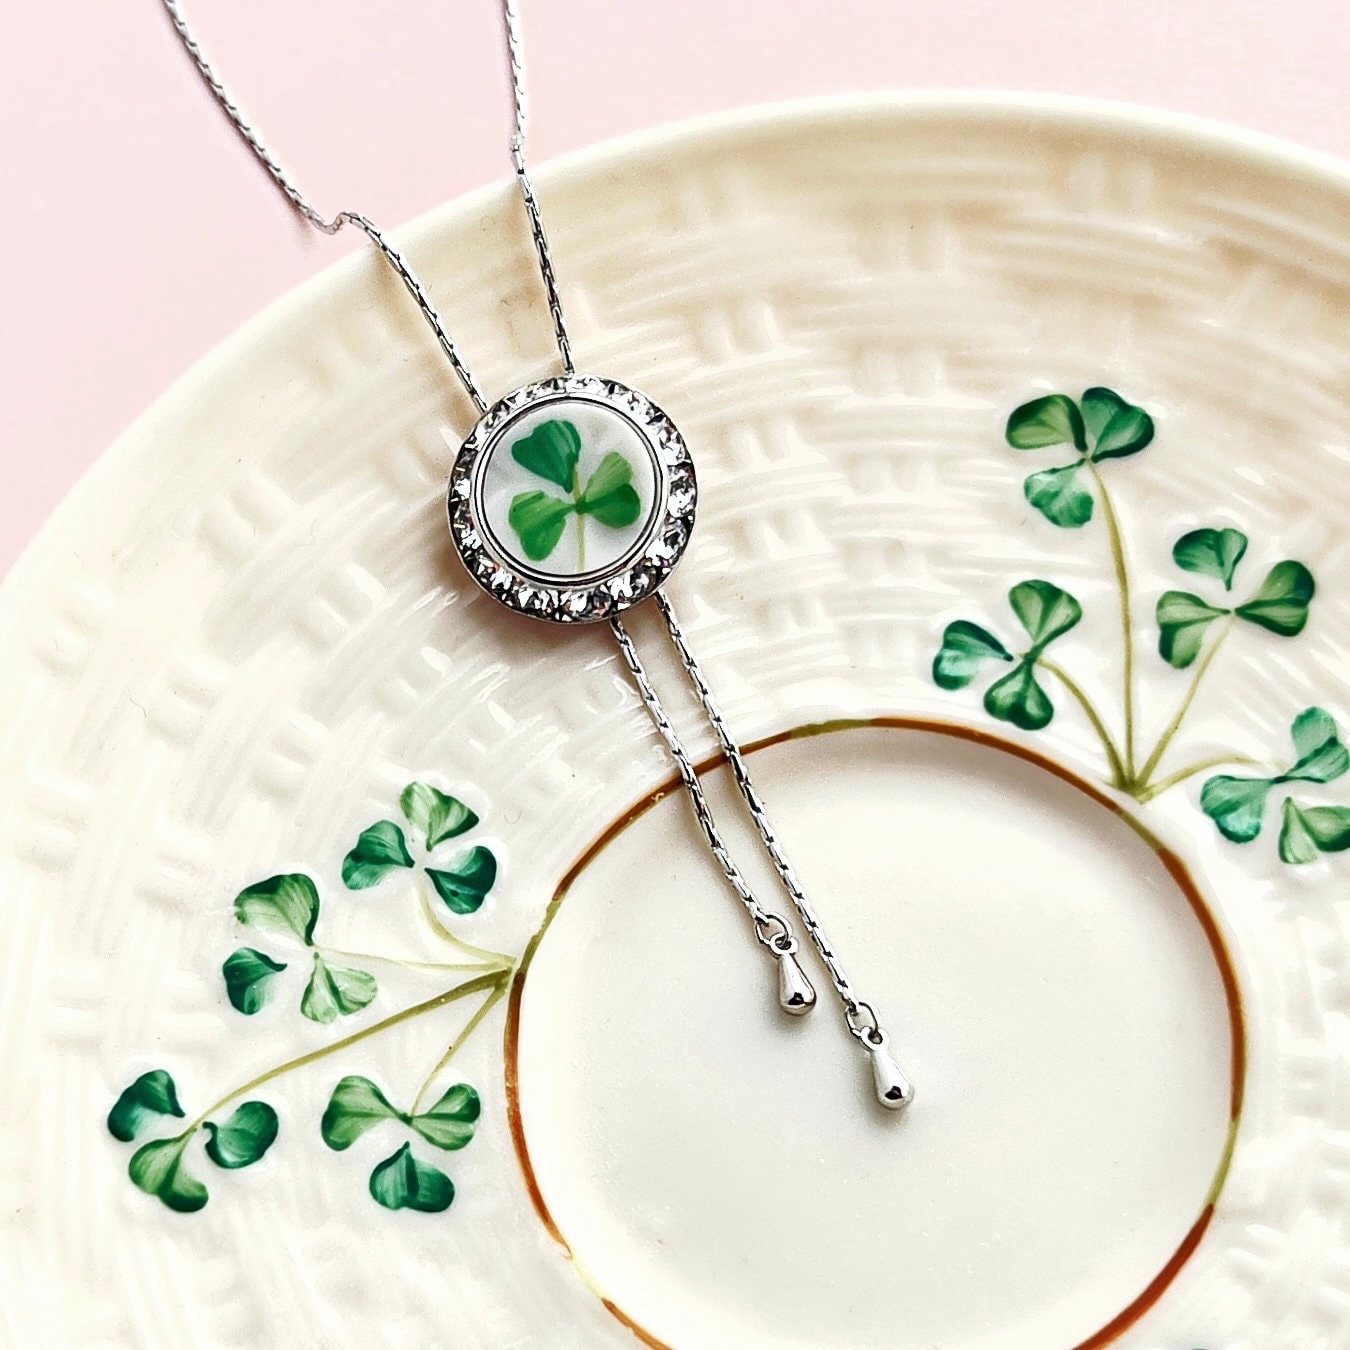 Belleek Irish China Lariat, Broken China Jewelry, Adjustable Celtic Shamrock Crystal Necklace, Broken China Jewelry, Gifts for Her